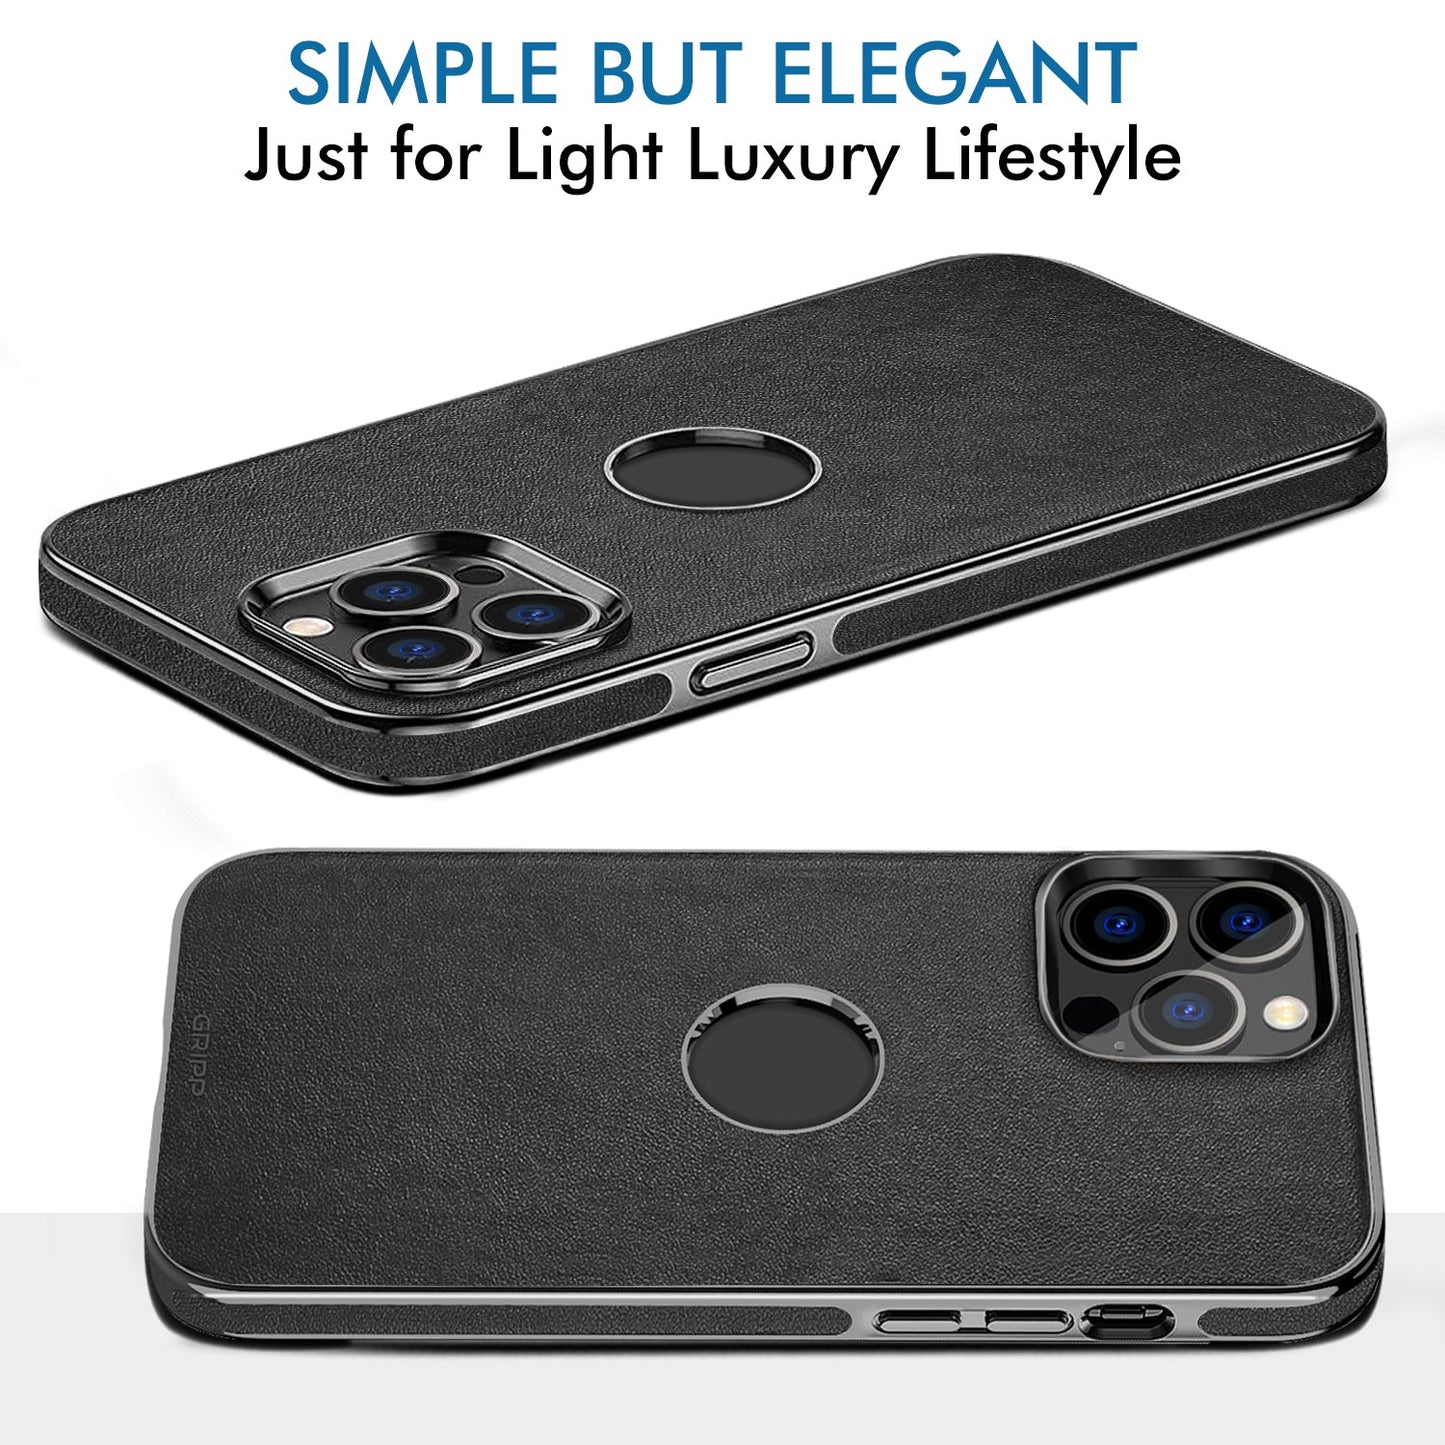 Gripp Heritage Case For Apple Iphone 13 Pro (6.1") - Black